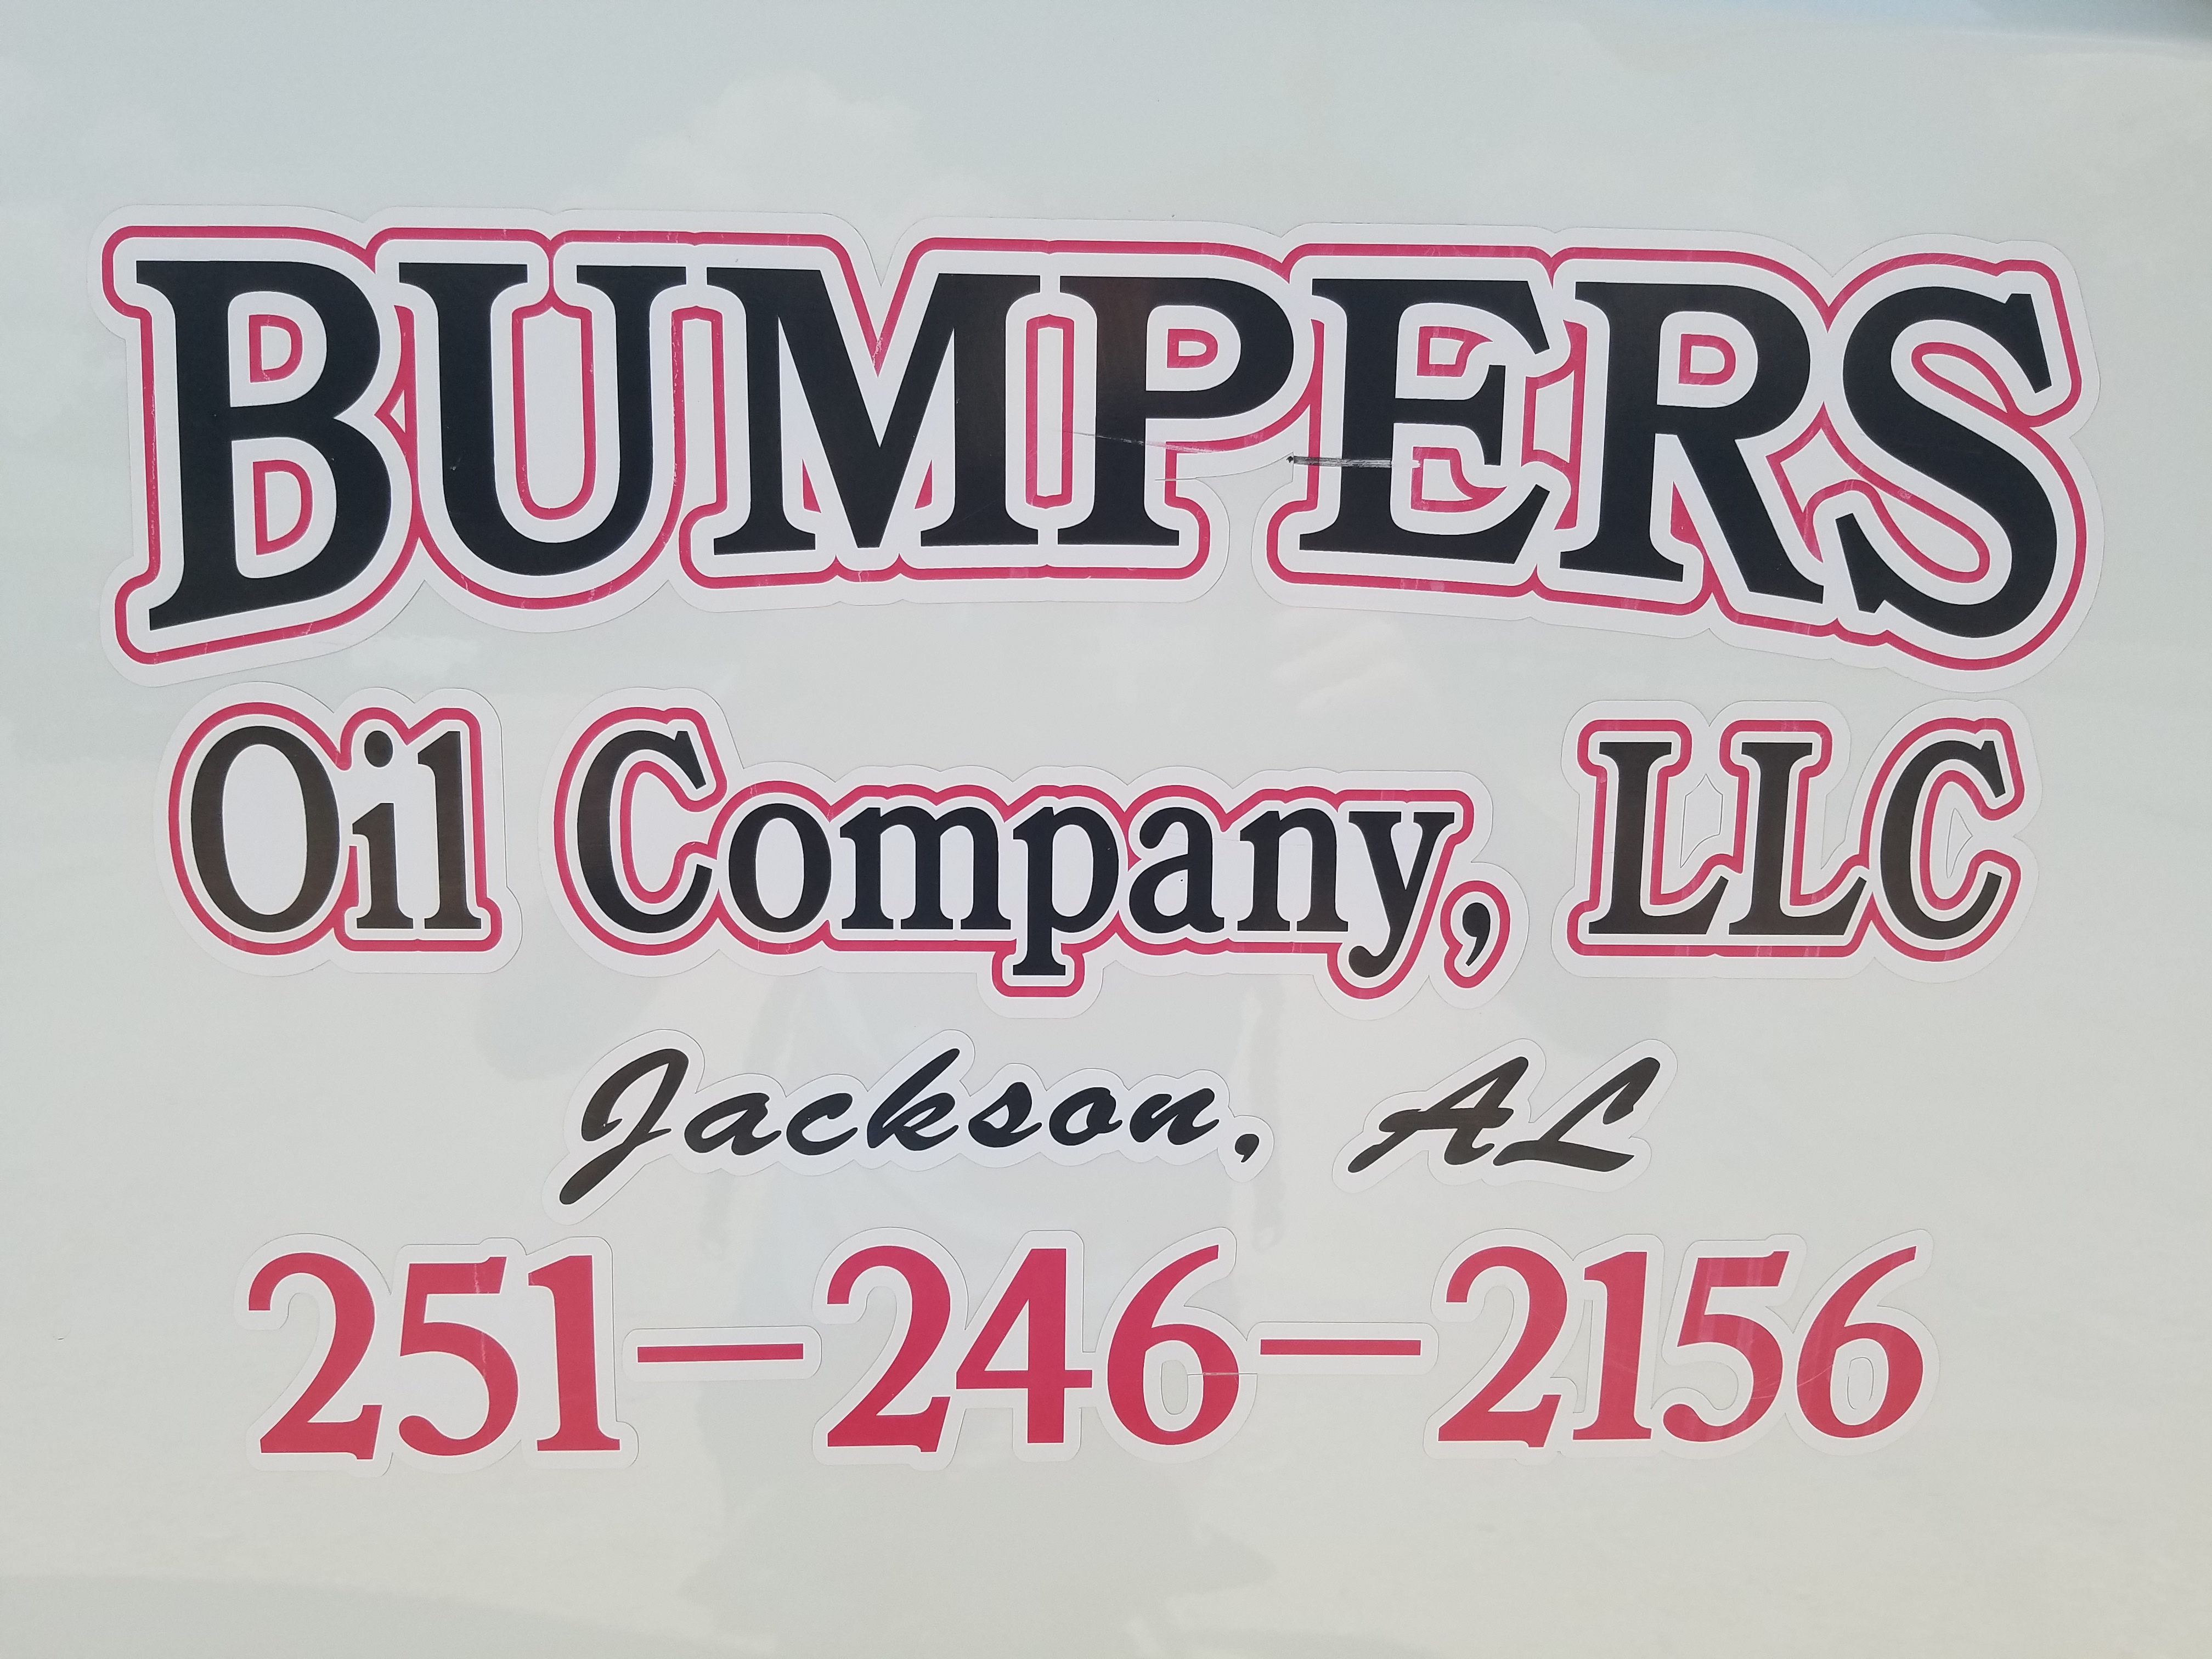 Bumpers Oil Company LLC